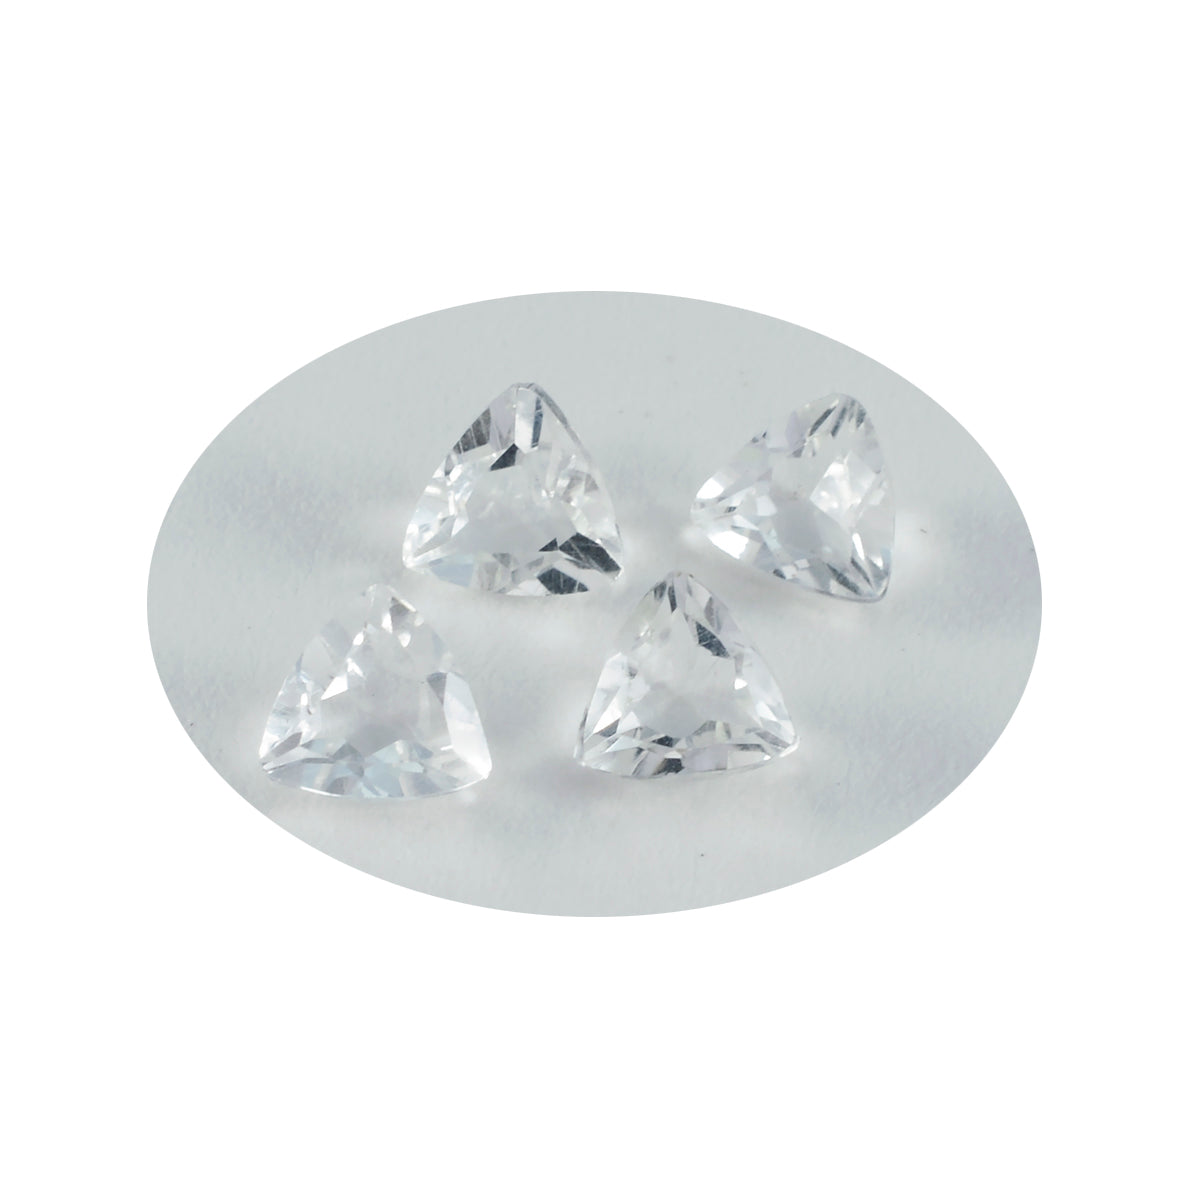 Riyogems 1PC White Crystal Quartz Faceted 11x11 mm Trillion Shape cute Quality Loose Gemstone